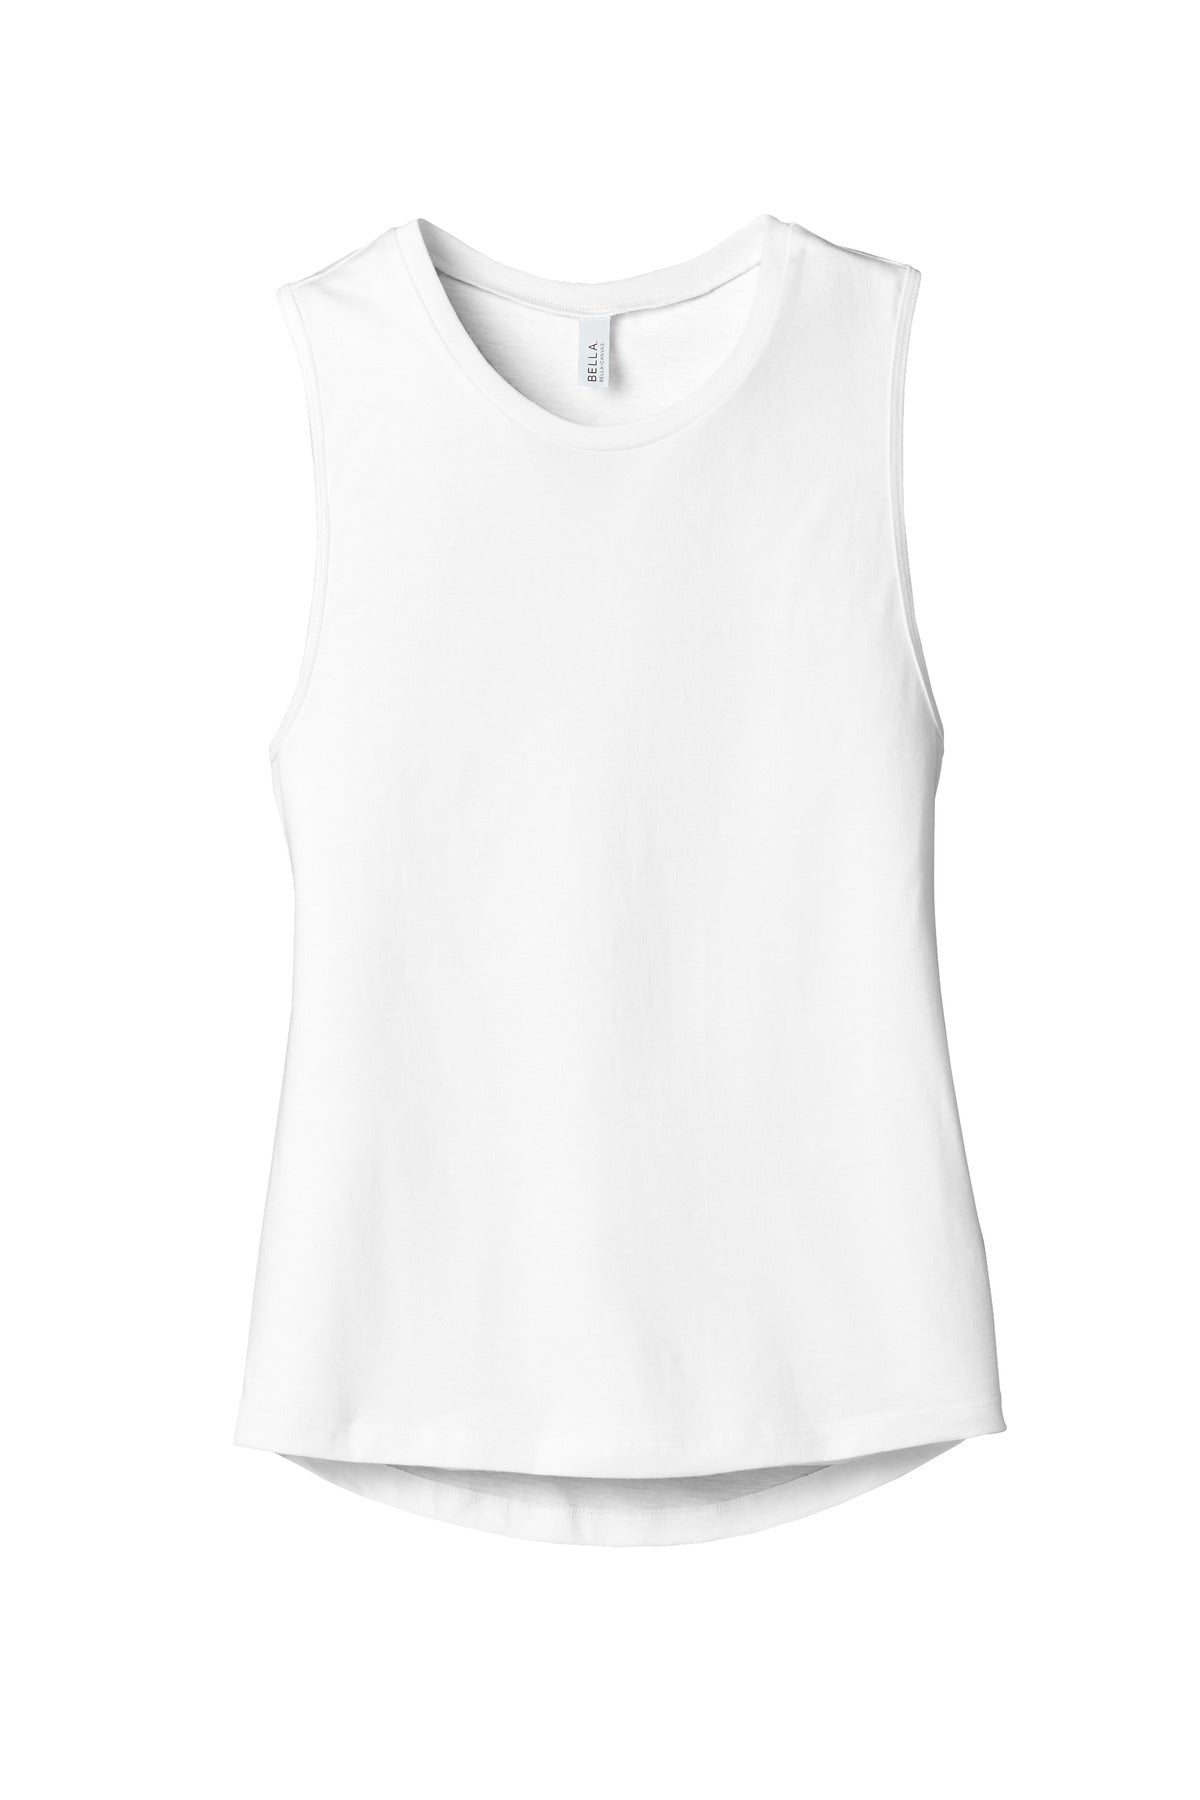 BELLA+CANVAS Women's Jersey Muscle Tank. BC6003 - BT Imprintables Shirts